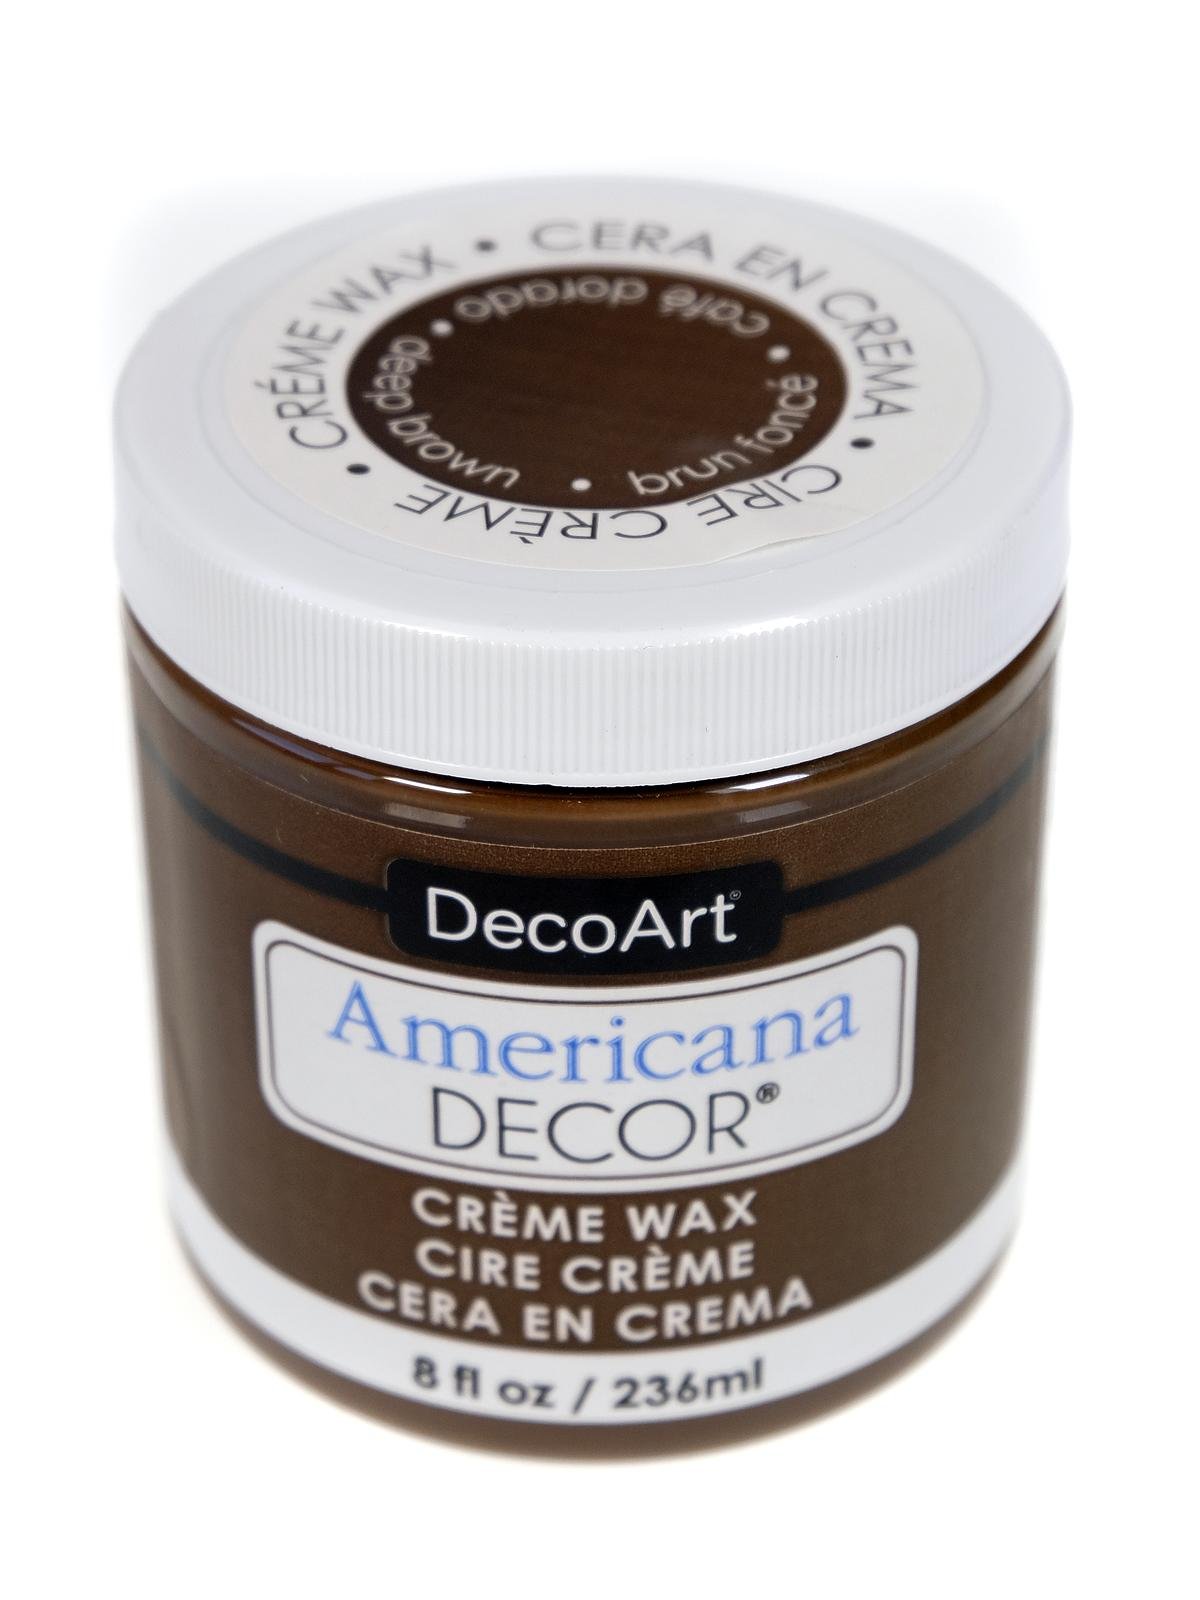 DecoArt - Americana Decor Creme Waxes